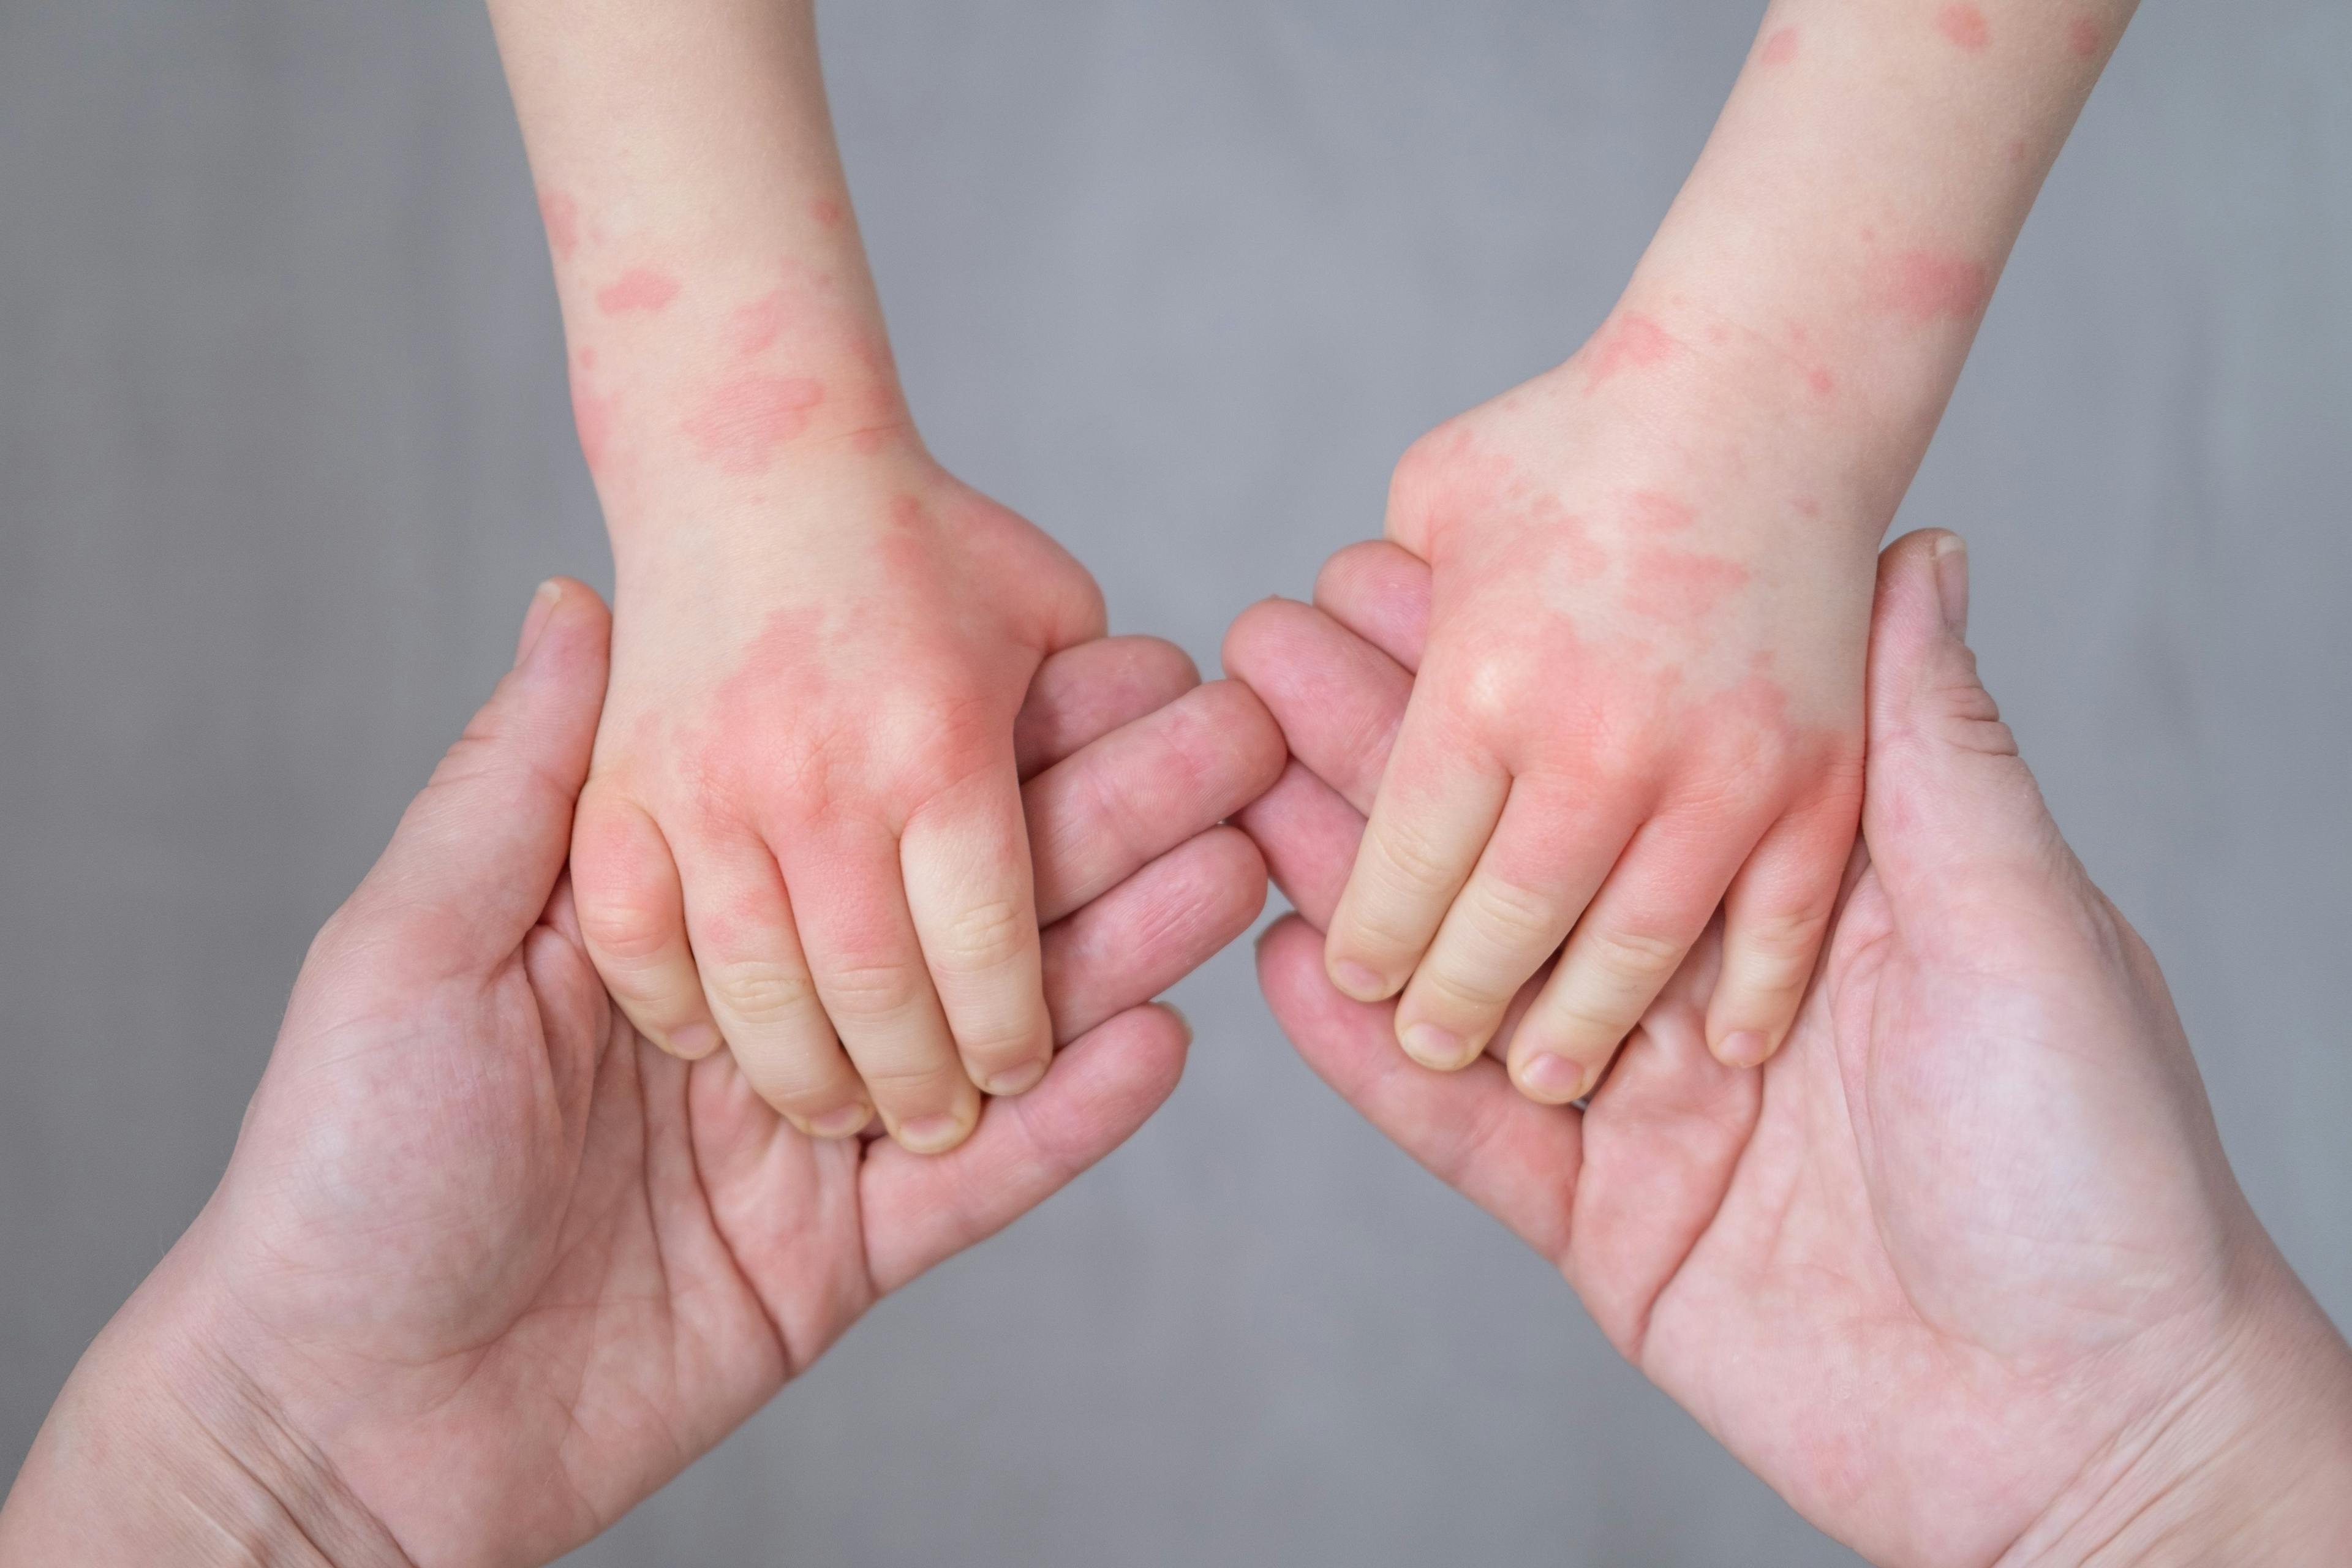 Child with atopic dermatitis (AD) on arms | Image Credit: Юля Шевцова - stock.adobe.com